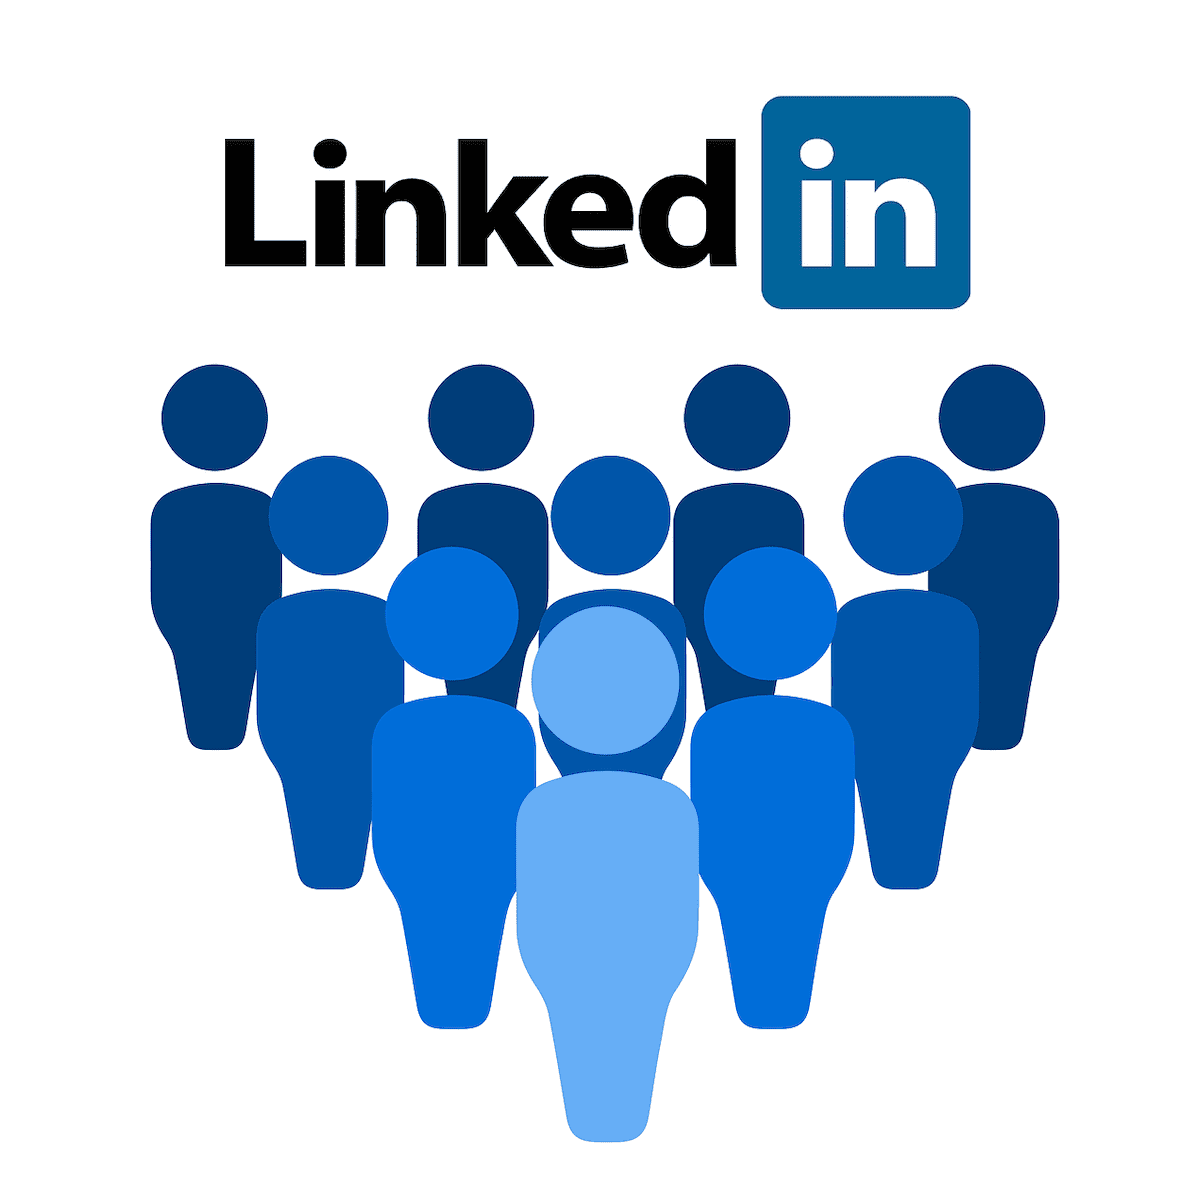 Create a Marketing Plan Using LinkedIn!